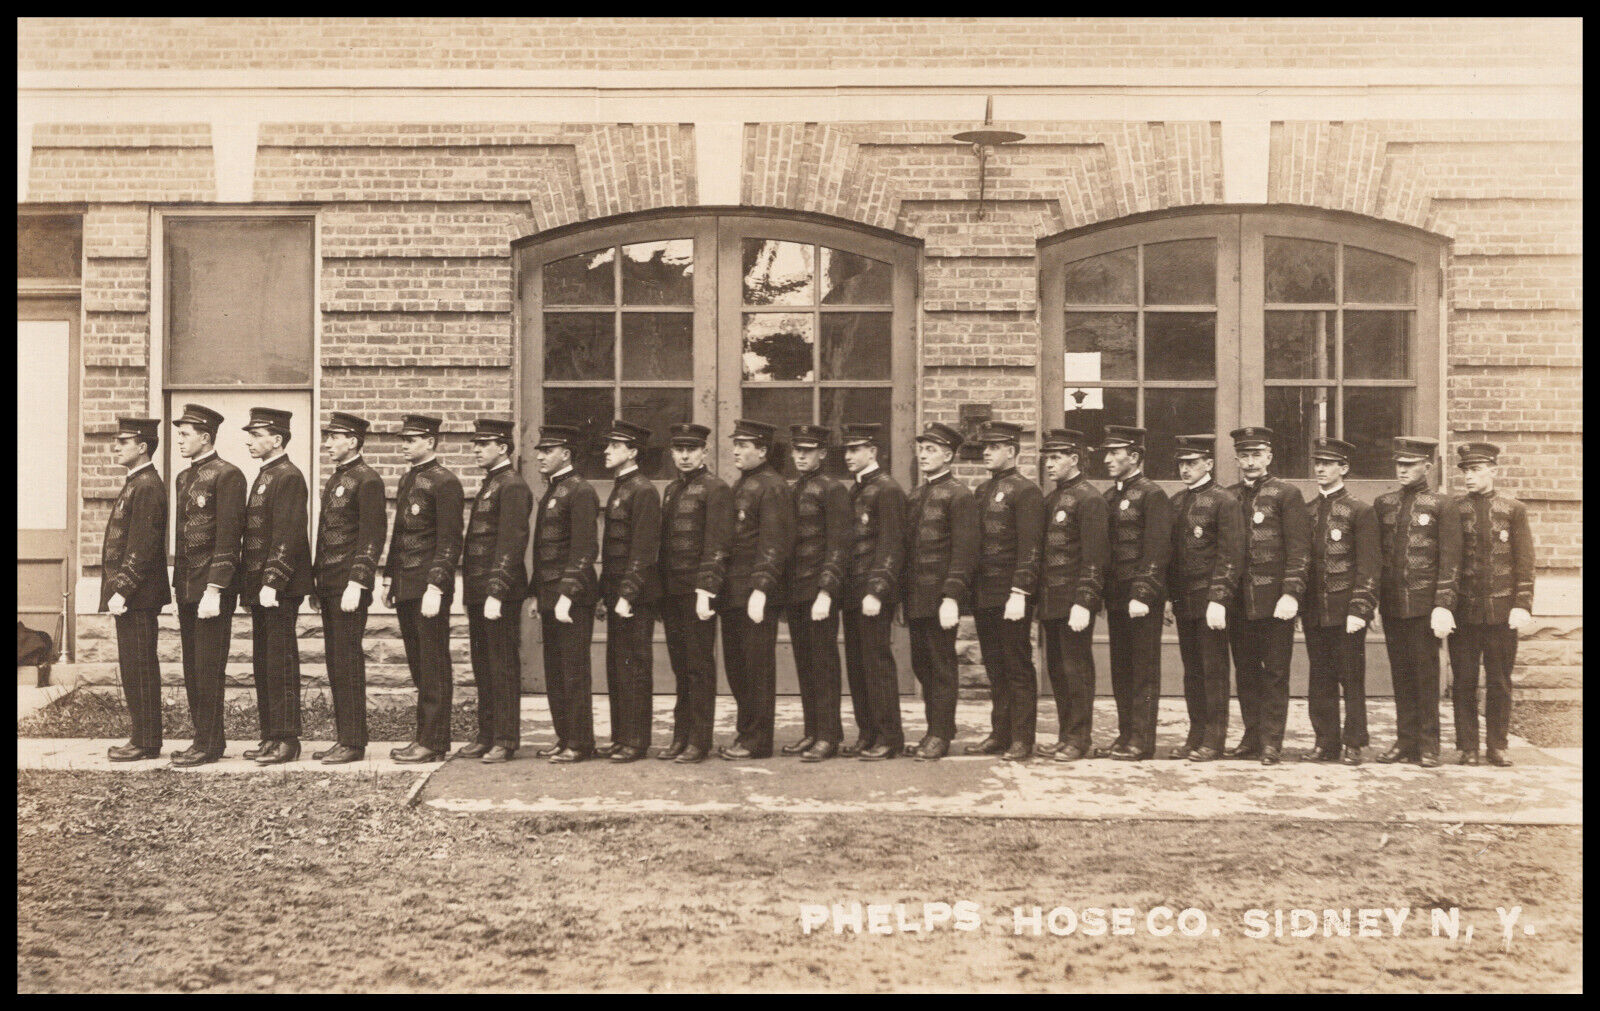 Sidney, New York, Phelps Hose Co, Fire Dept., Firemen, Real Photo Postcard RPPC